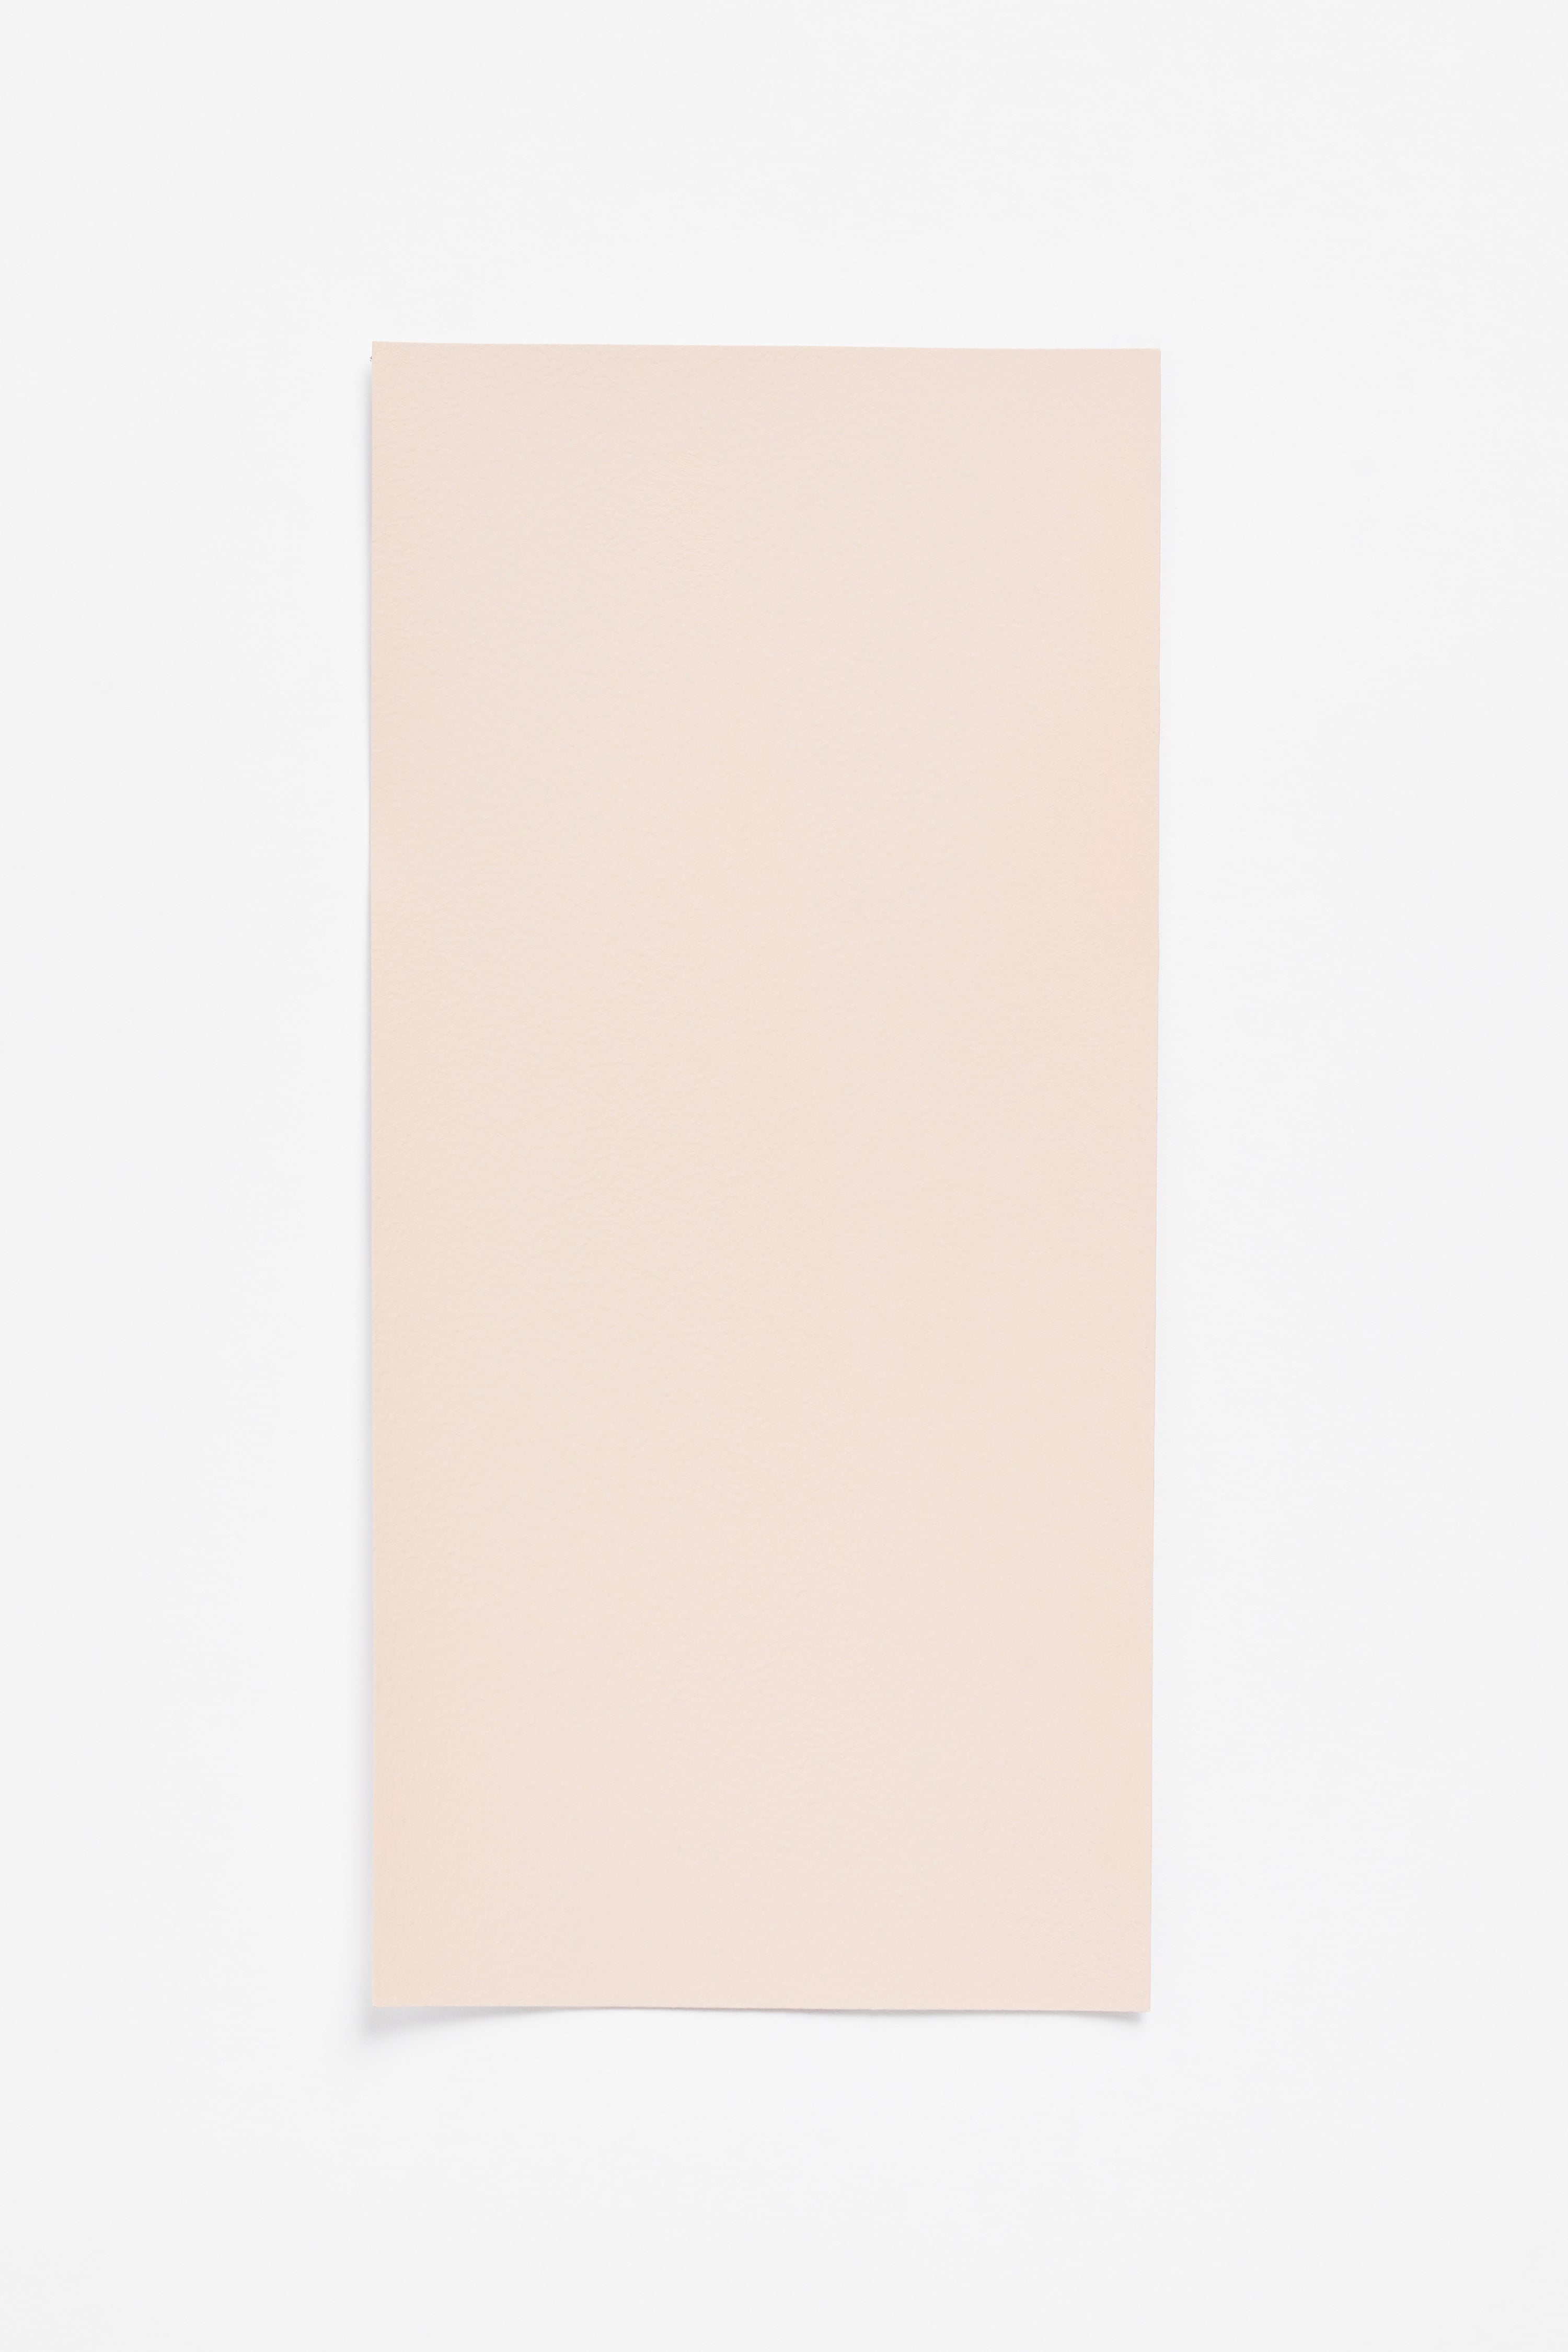 Rose Chaud — a paint colour developed by Ronan Bouroullec for Blēo